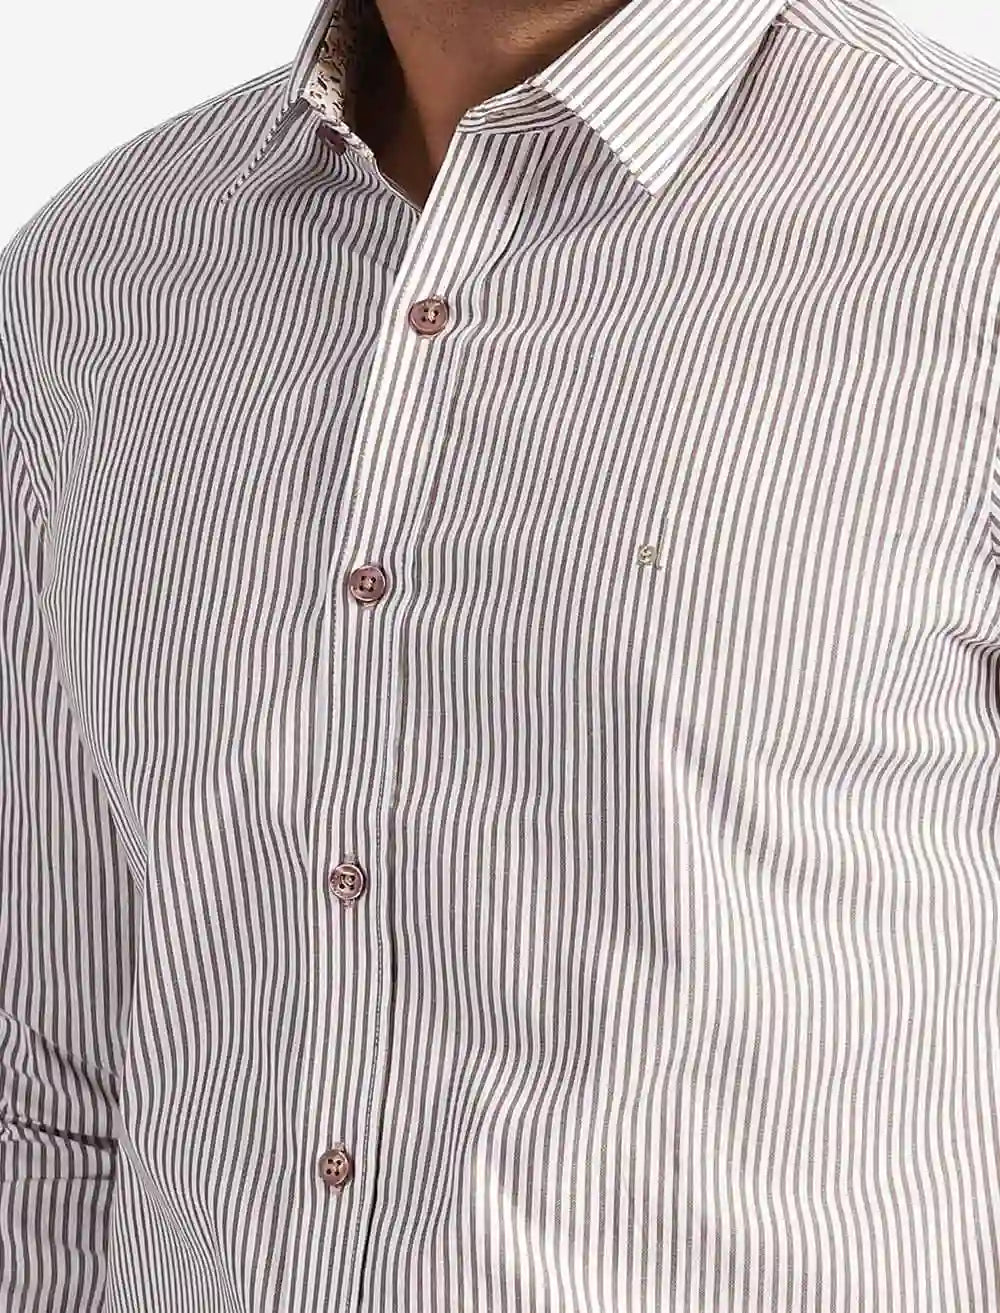 Stripe Men's Formal Shirt